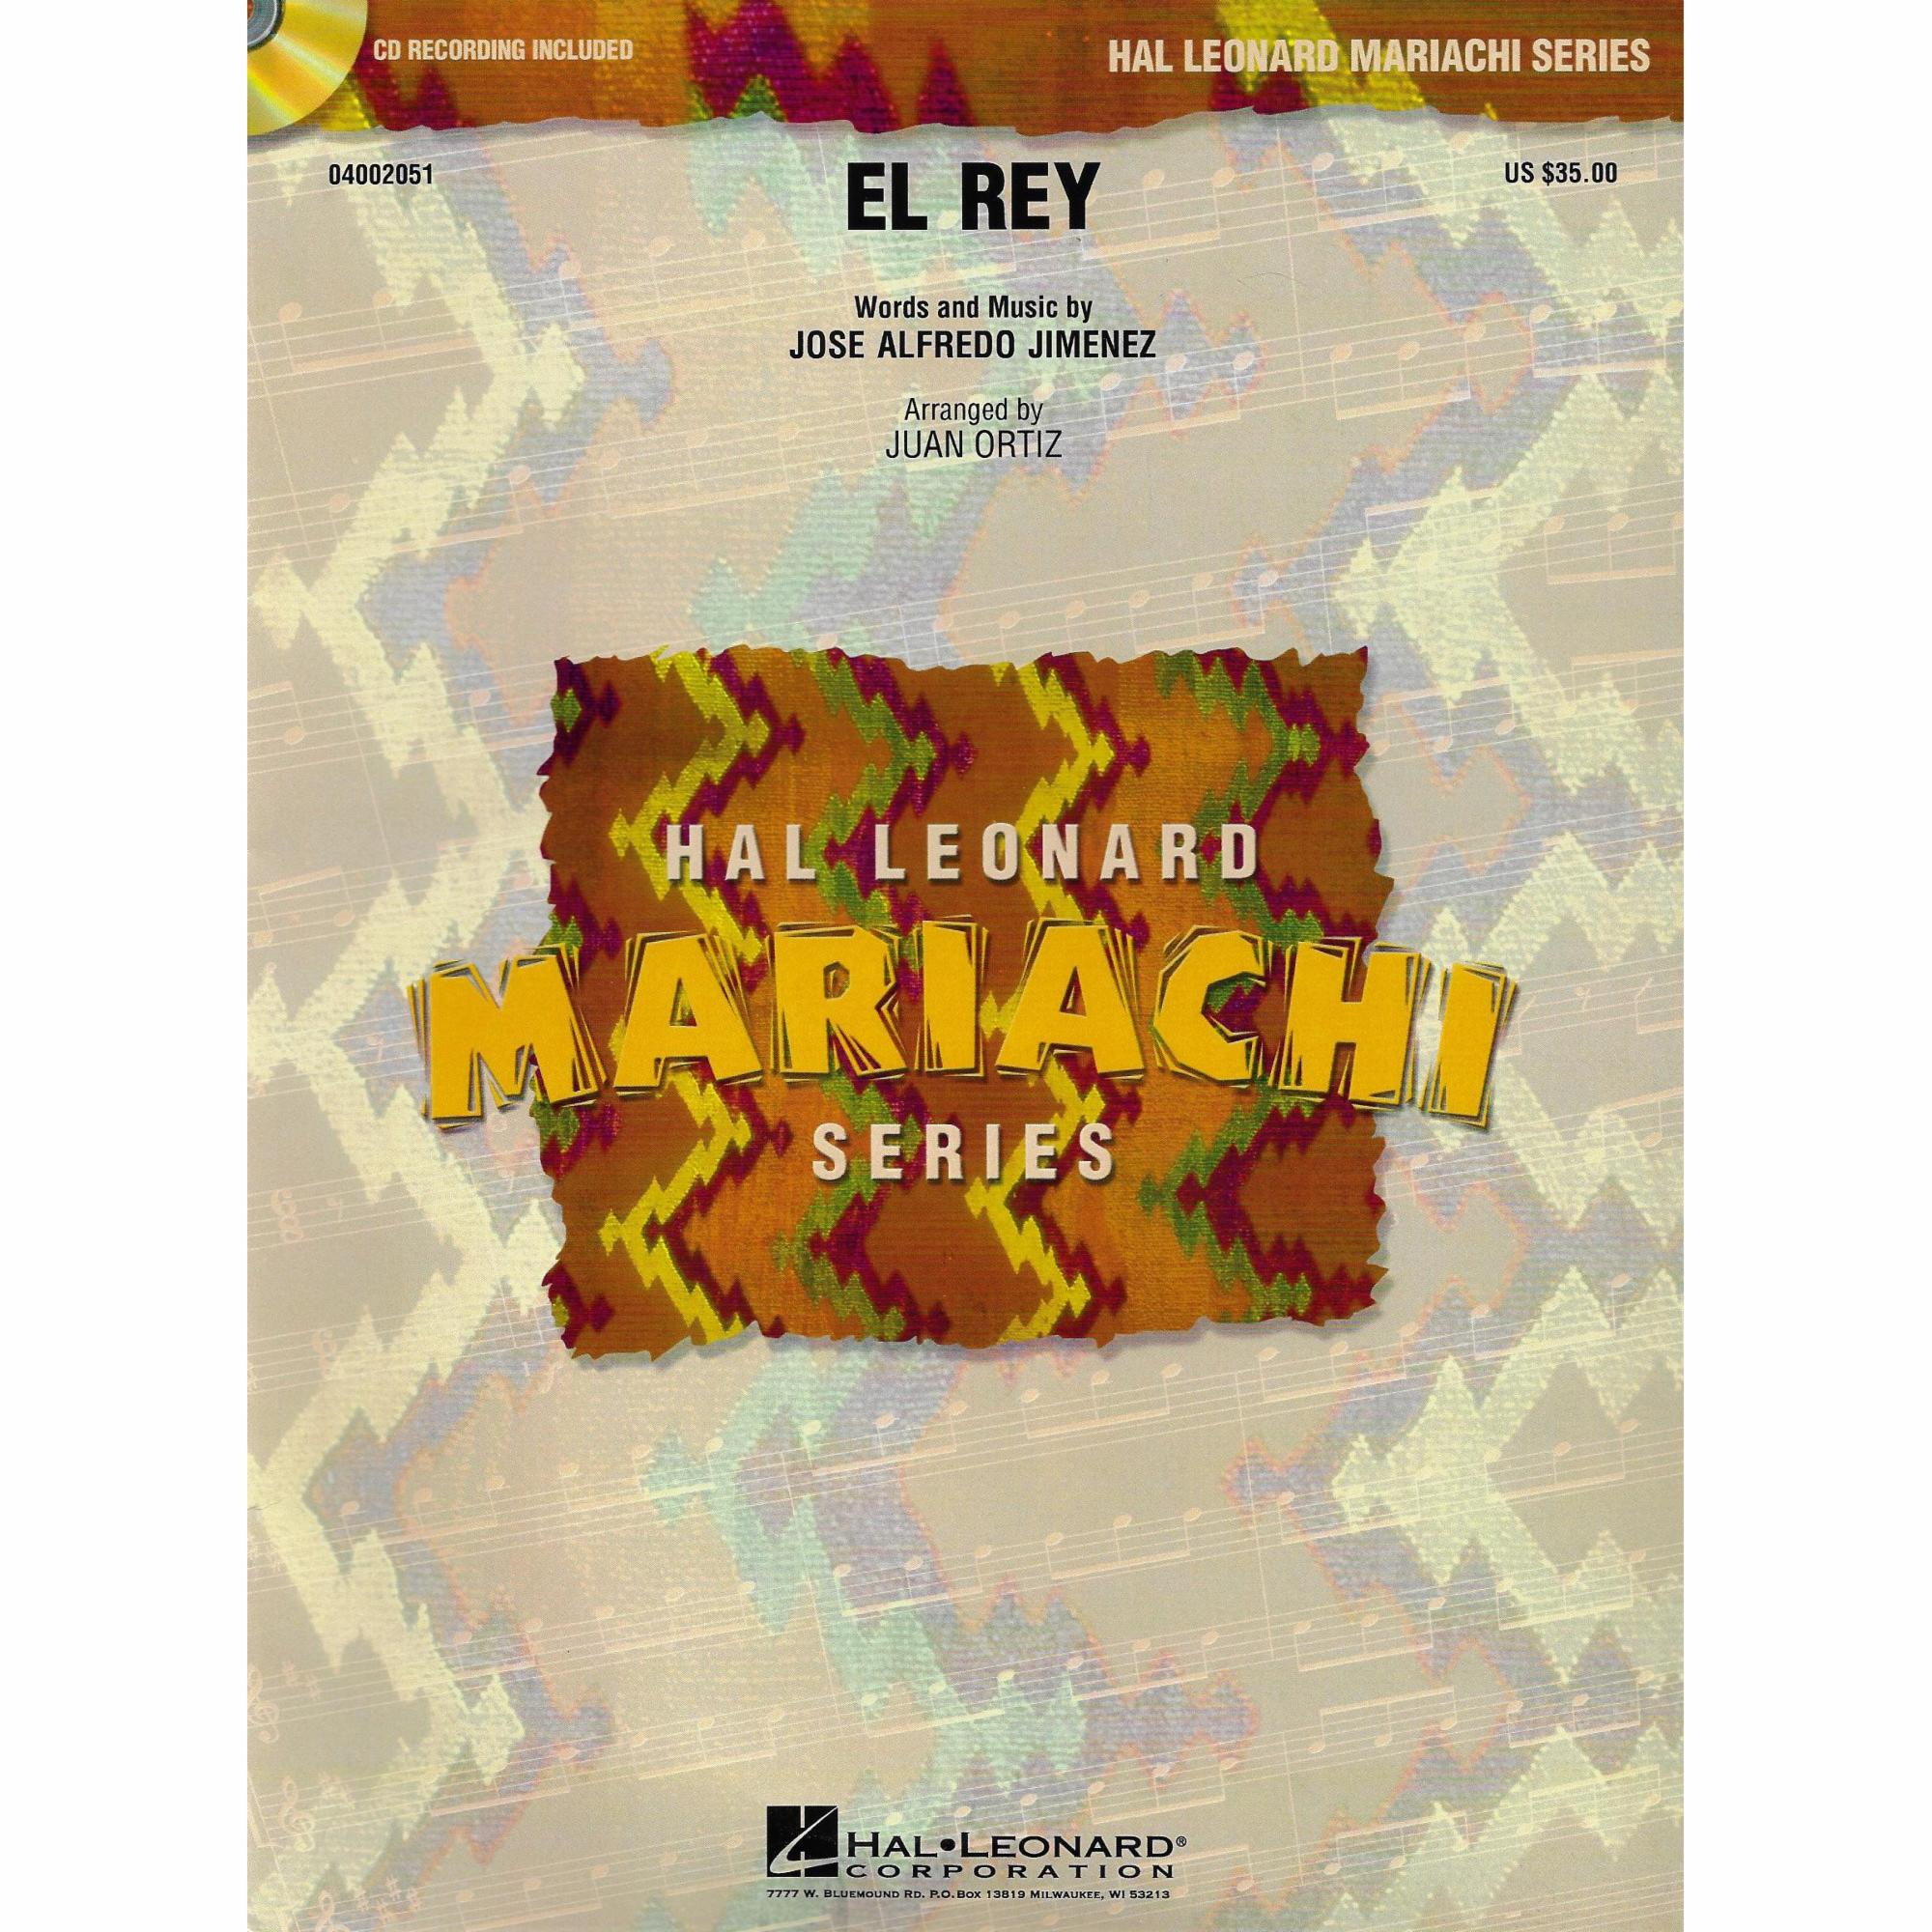 El Rey for Mariachi Band